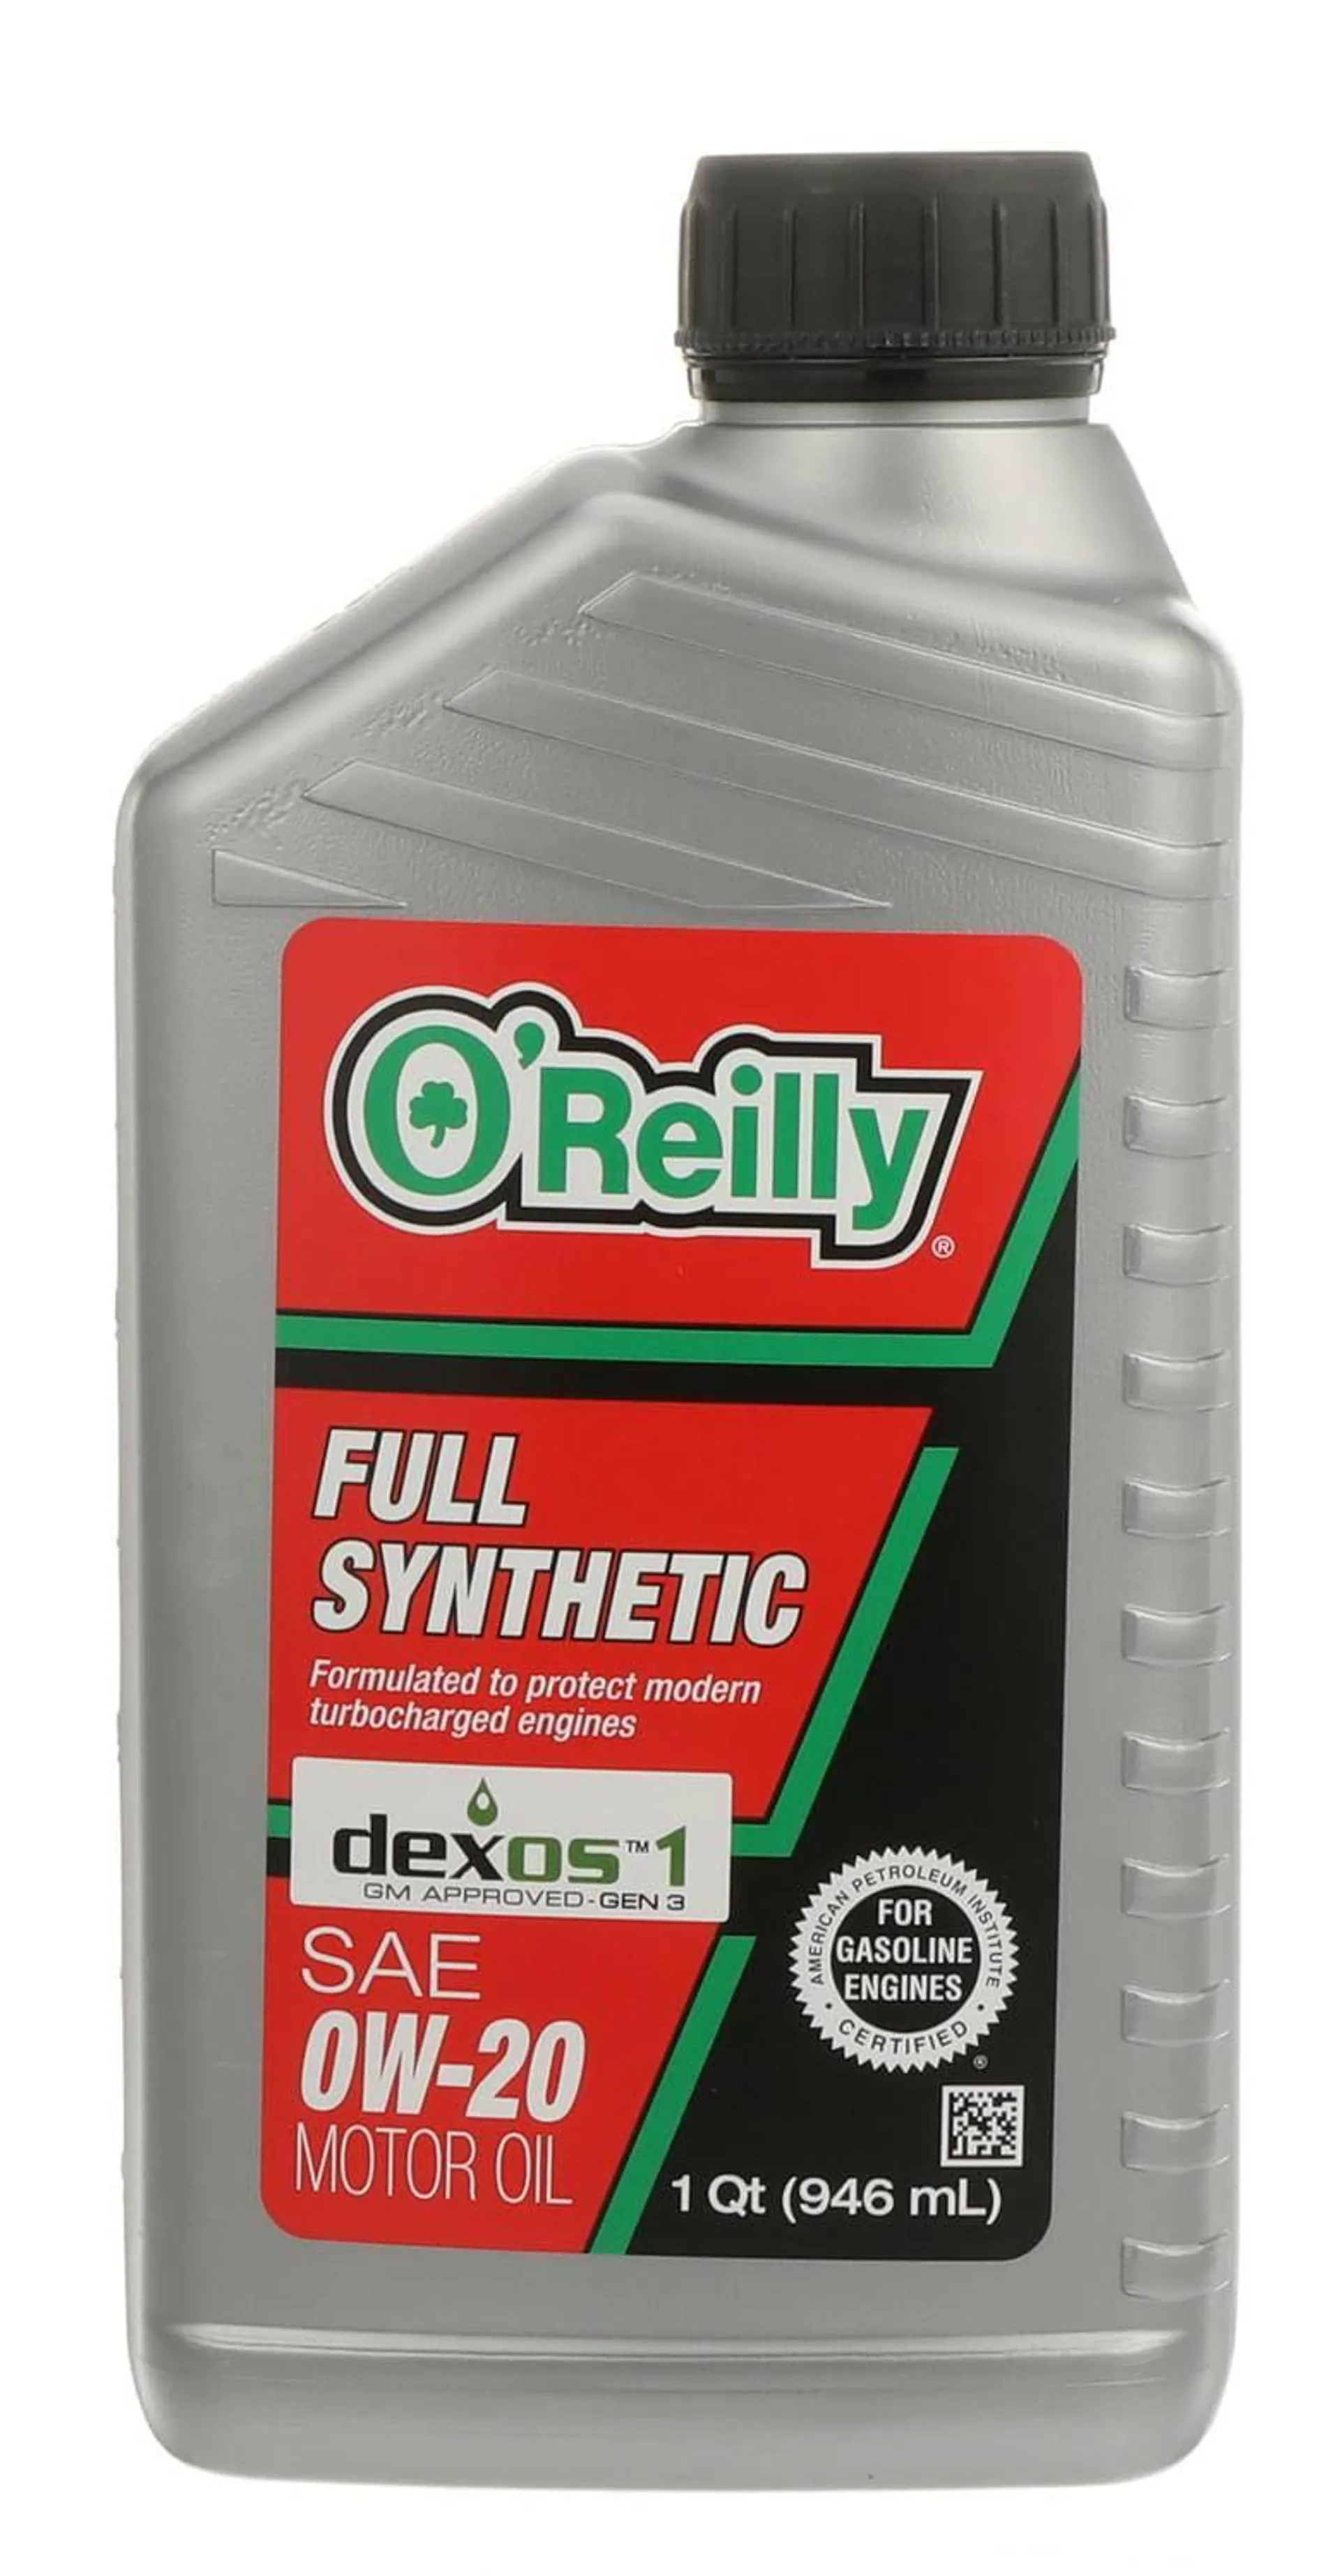 O'Reilly Full Synthetic Motor Oil 0W-20 1 Quart - SYN0-20